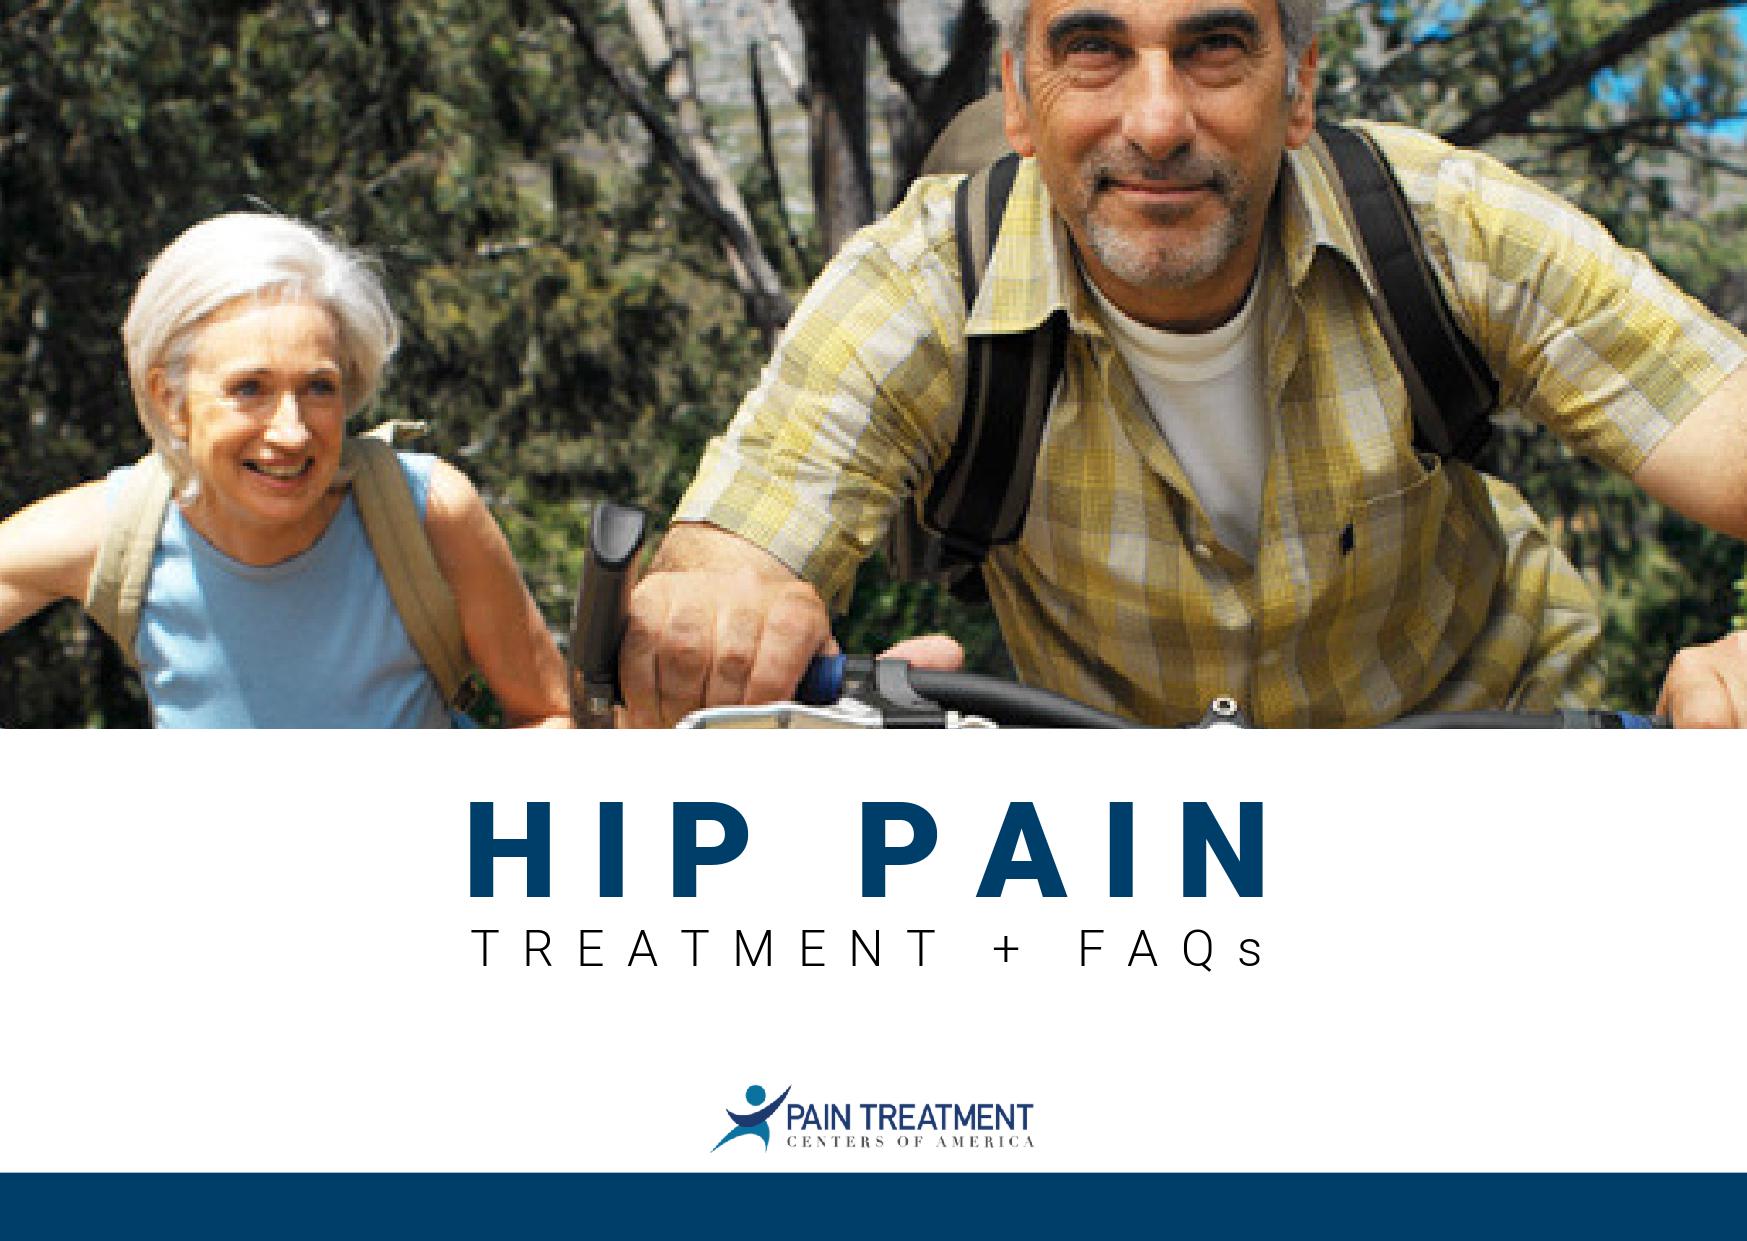 Hip Pain and Treatment at PTCOA